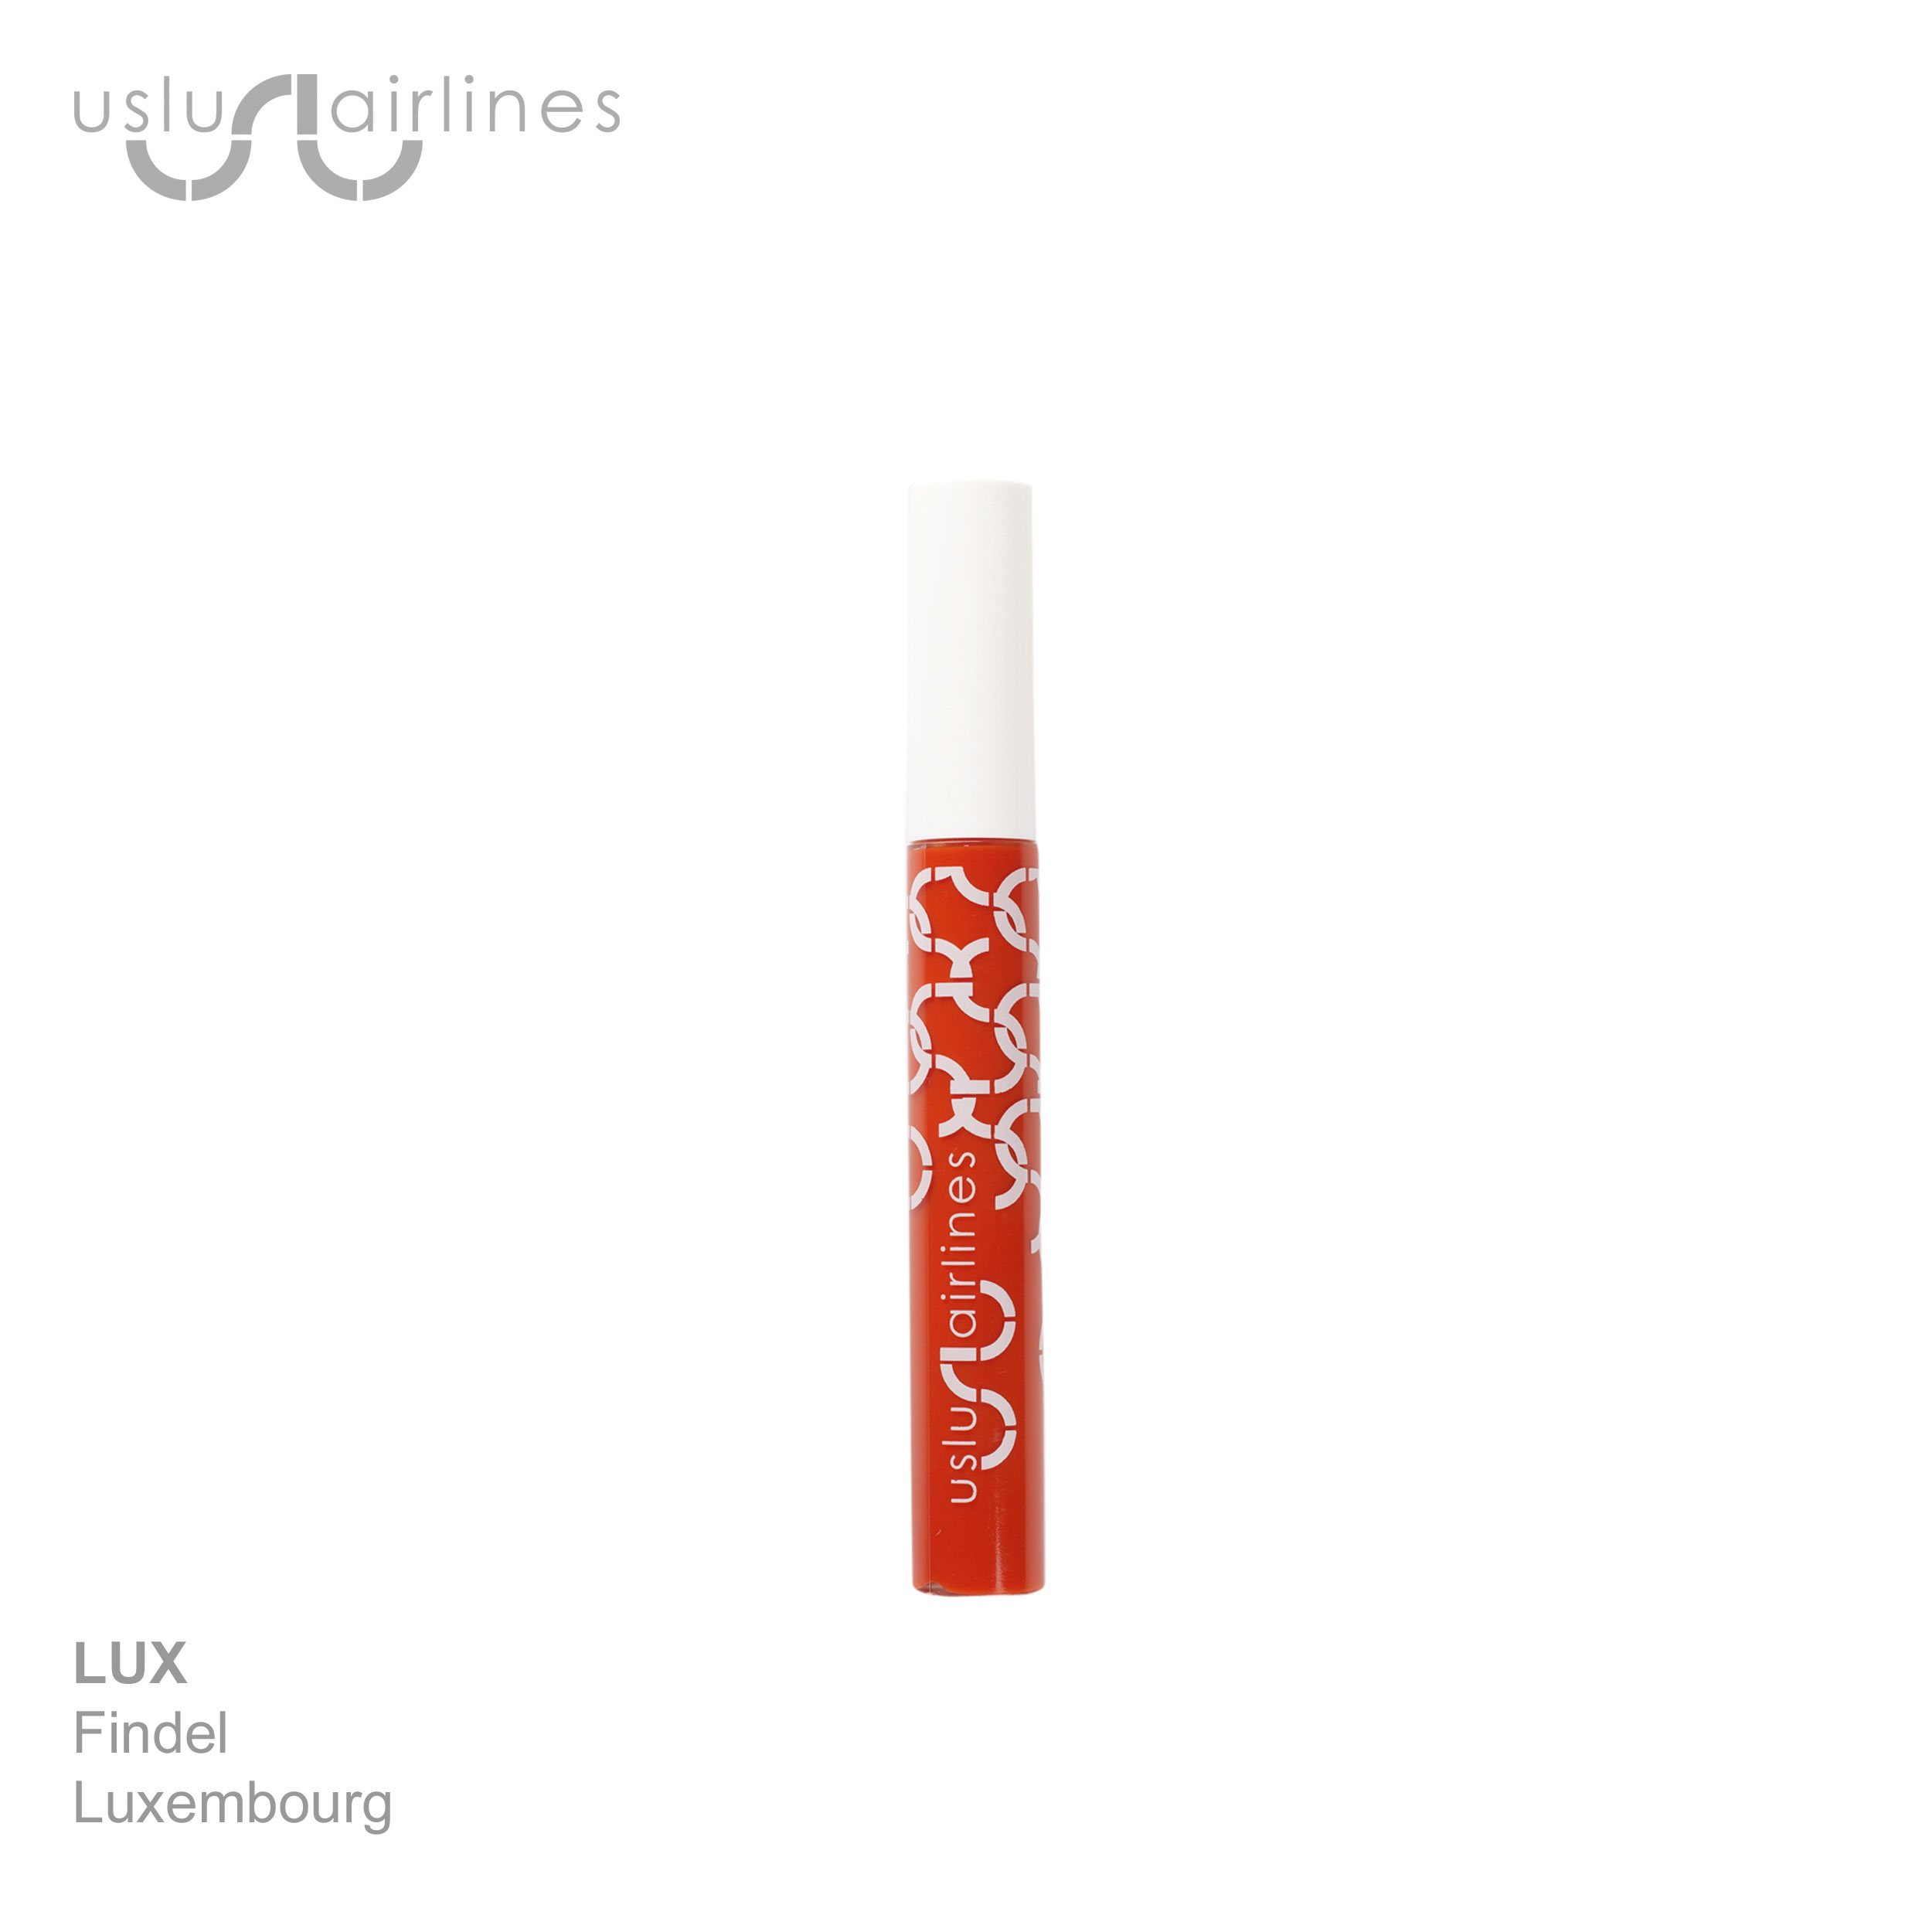 Uslu Airlines Lipgloss LUX Findel Strong Orange